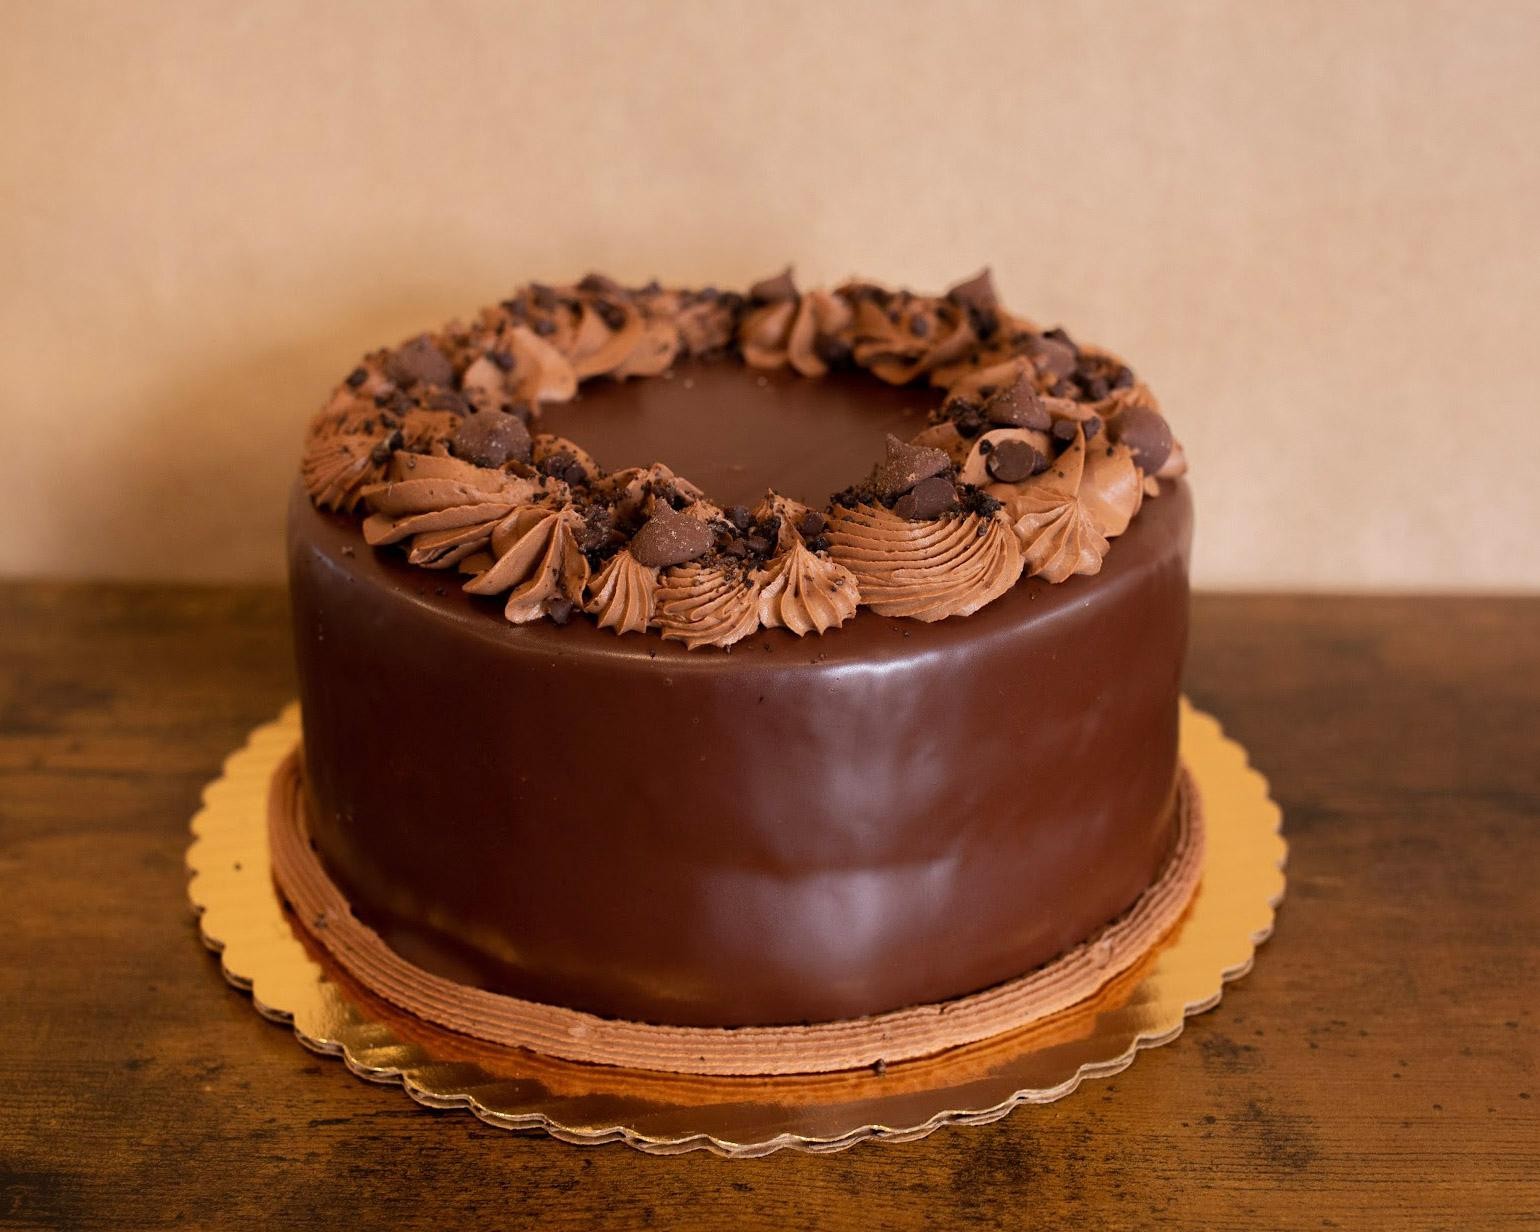 Killer Chocolate Cake - 8"